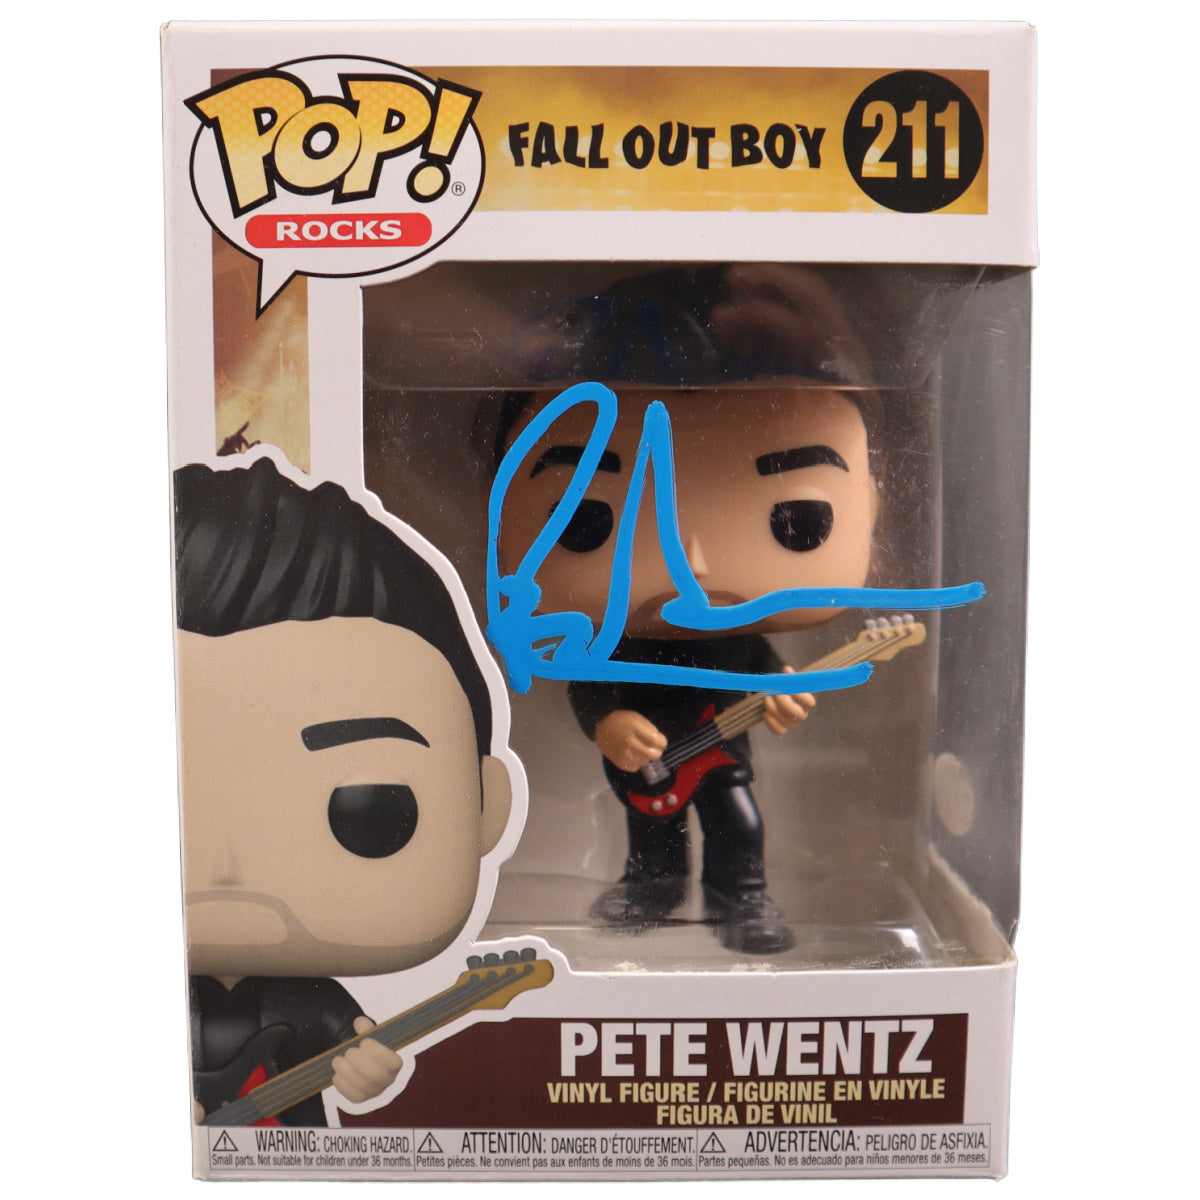 Pete Wentz Signed Funko POP Fall Out Boy 211 Autographed ACOA